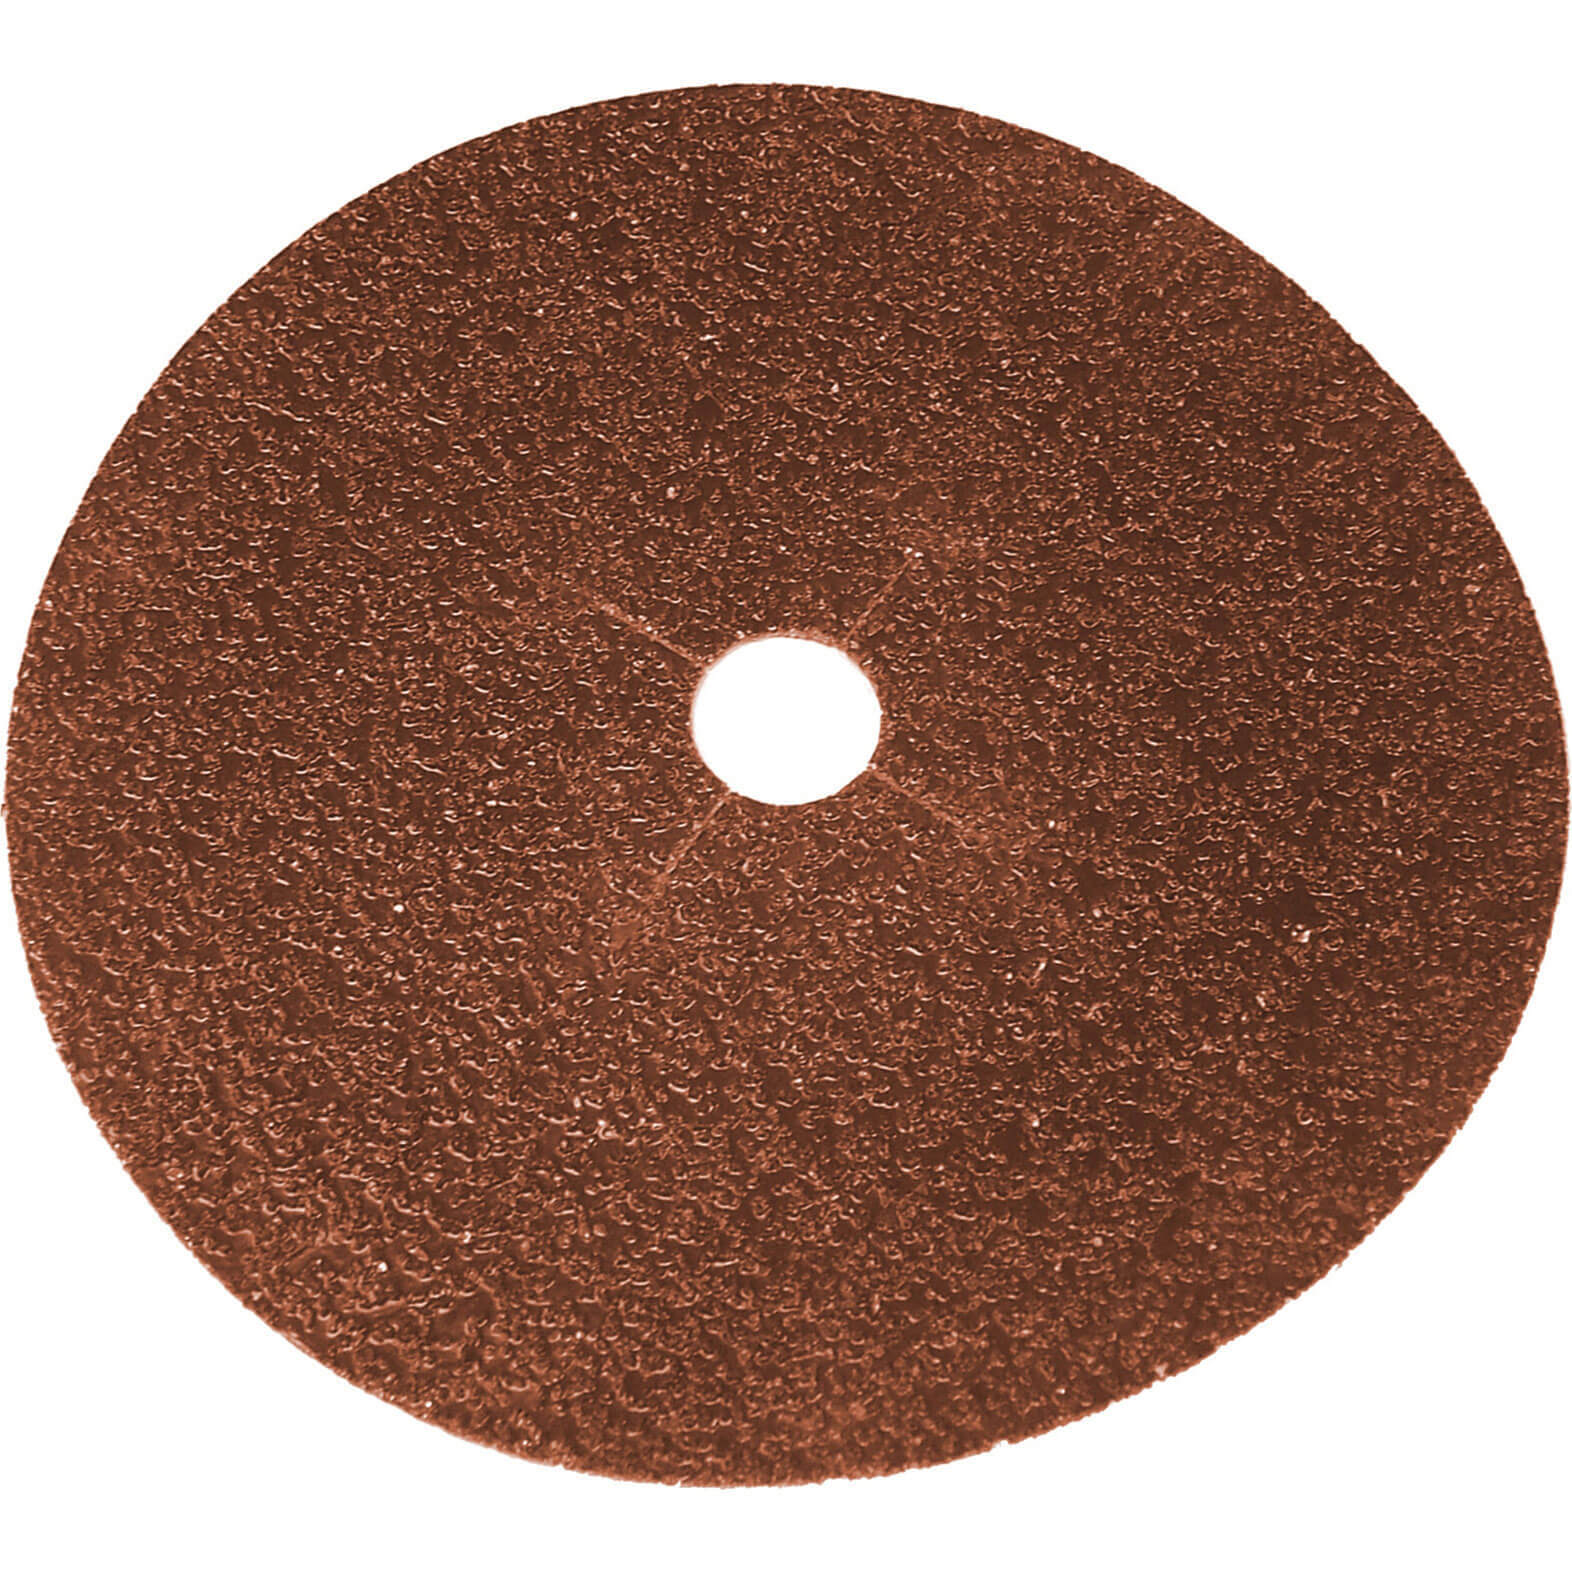 Image of Faithfull Aluminium Oxide Sanding Discs 178mm 24g